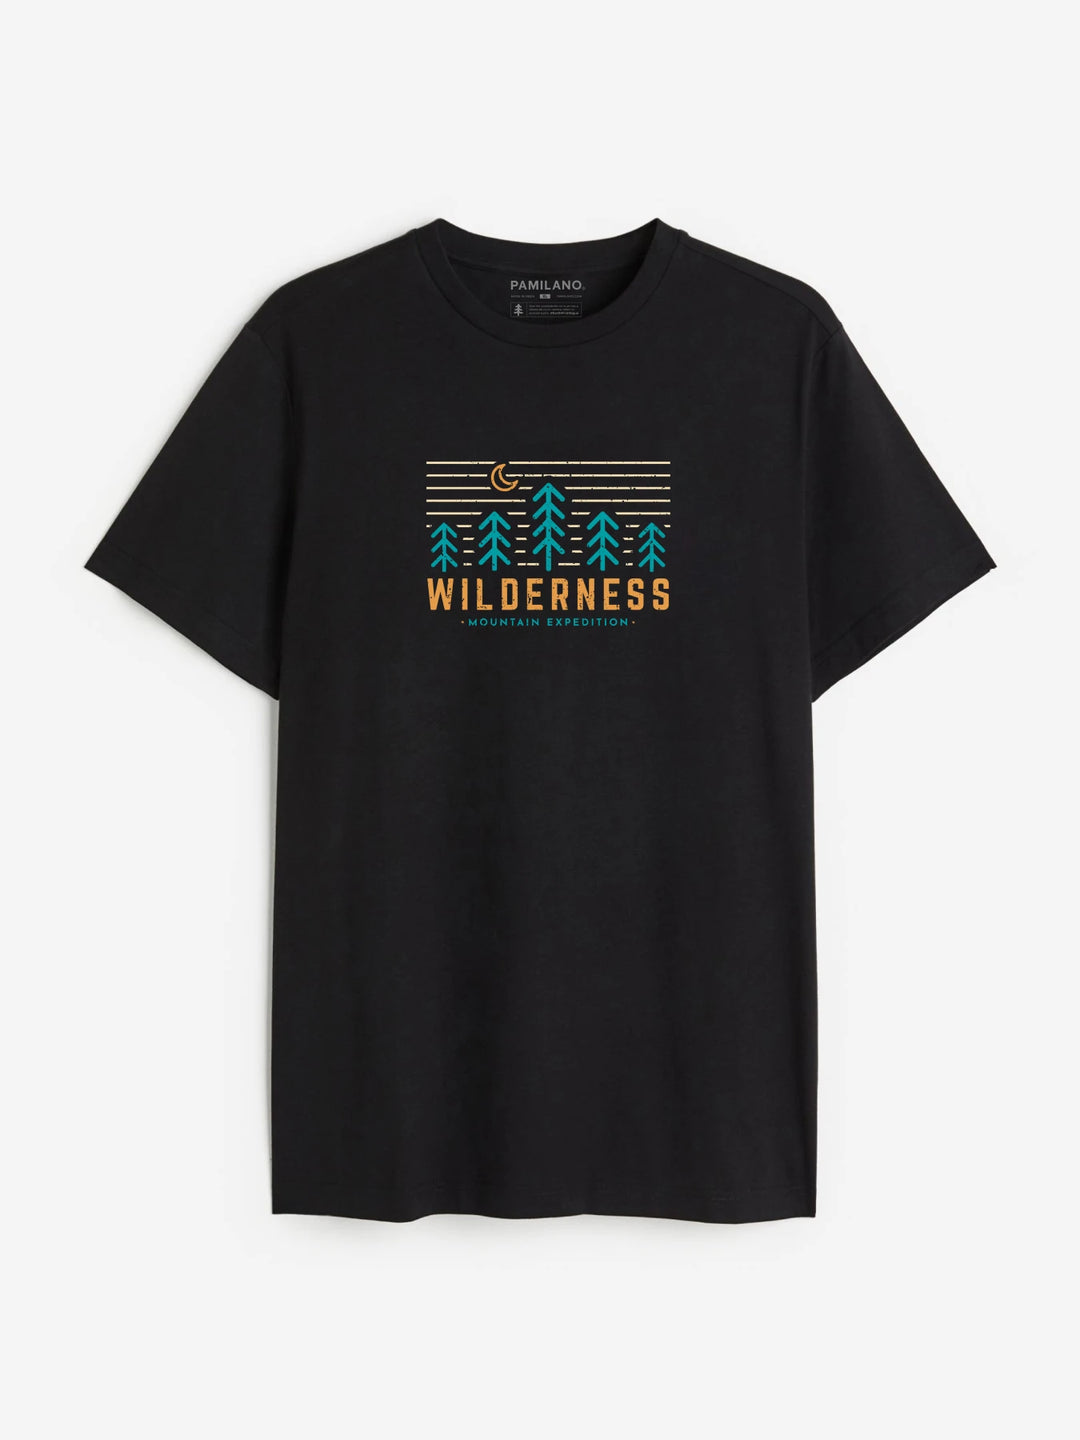 Wilderness - Mountain Expedition - Unisex T-Shirt